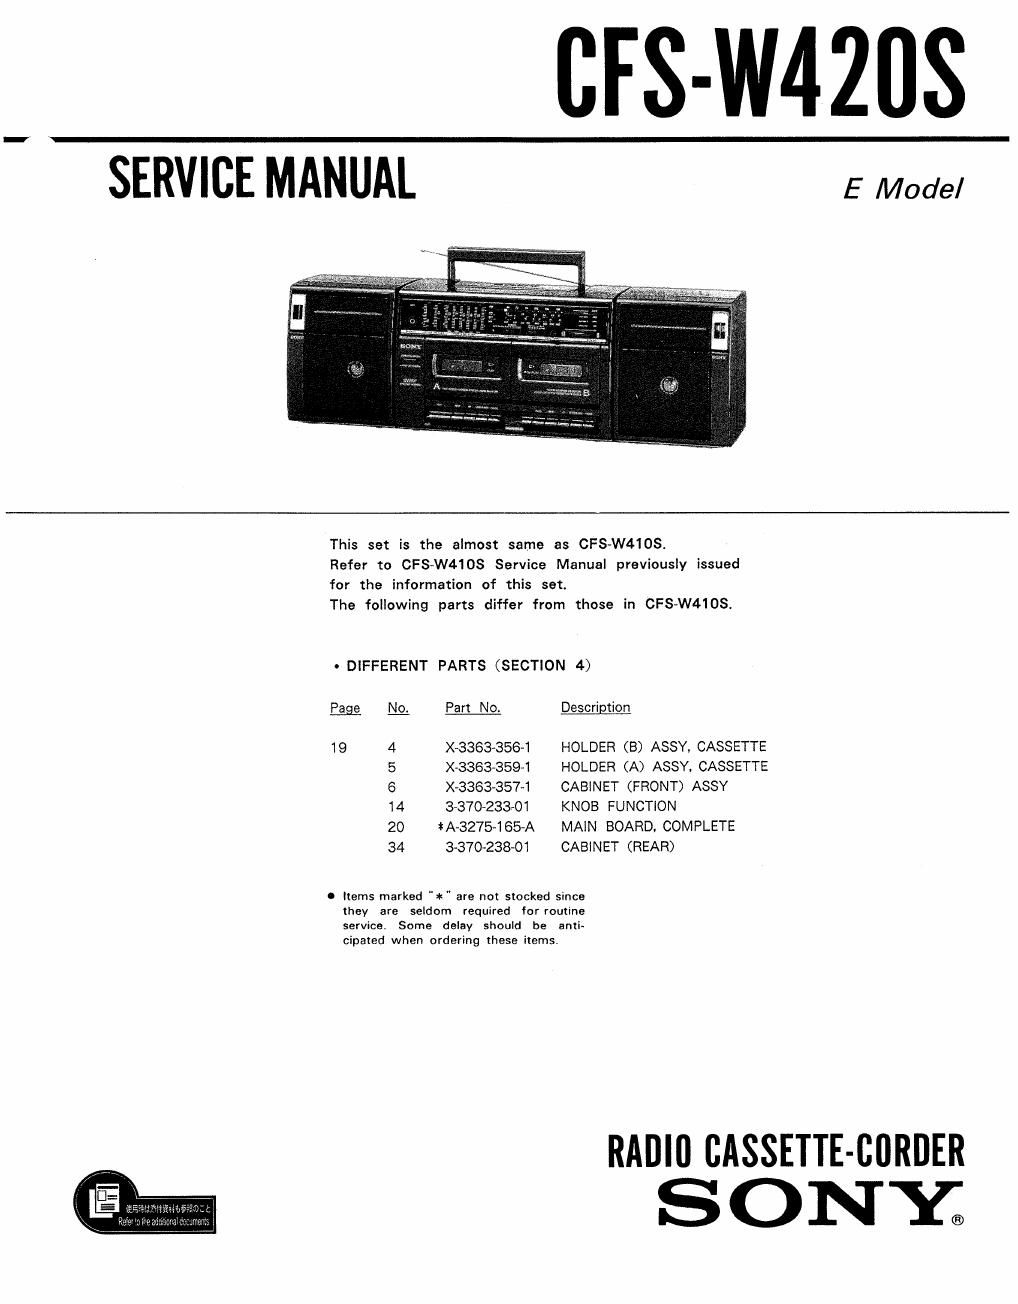 sony cfs w 420 s service manual